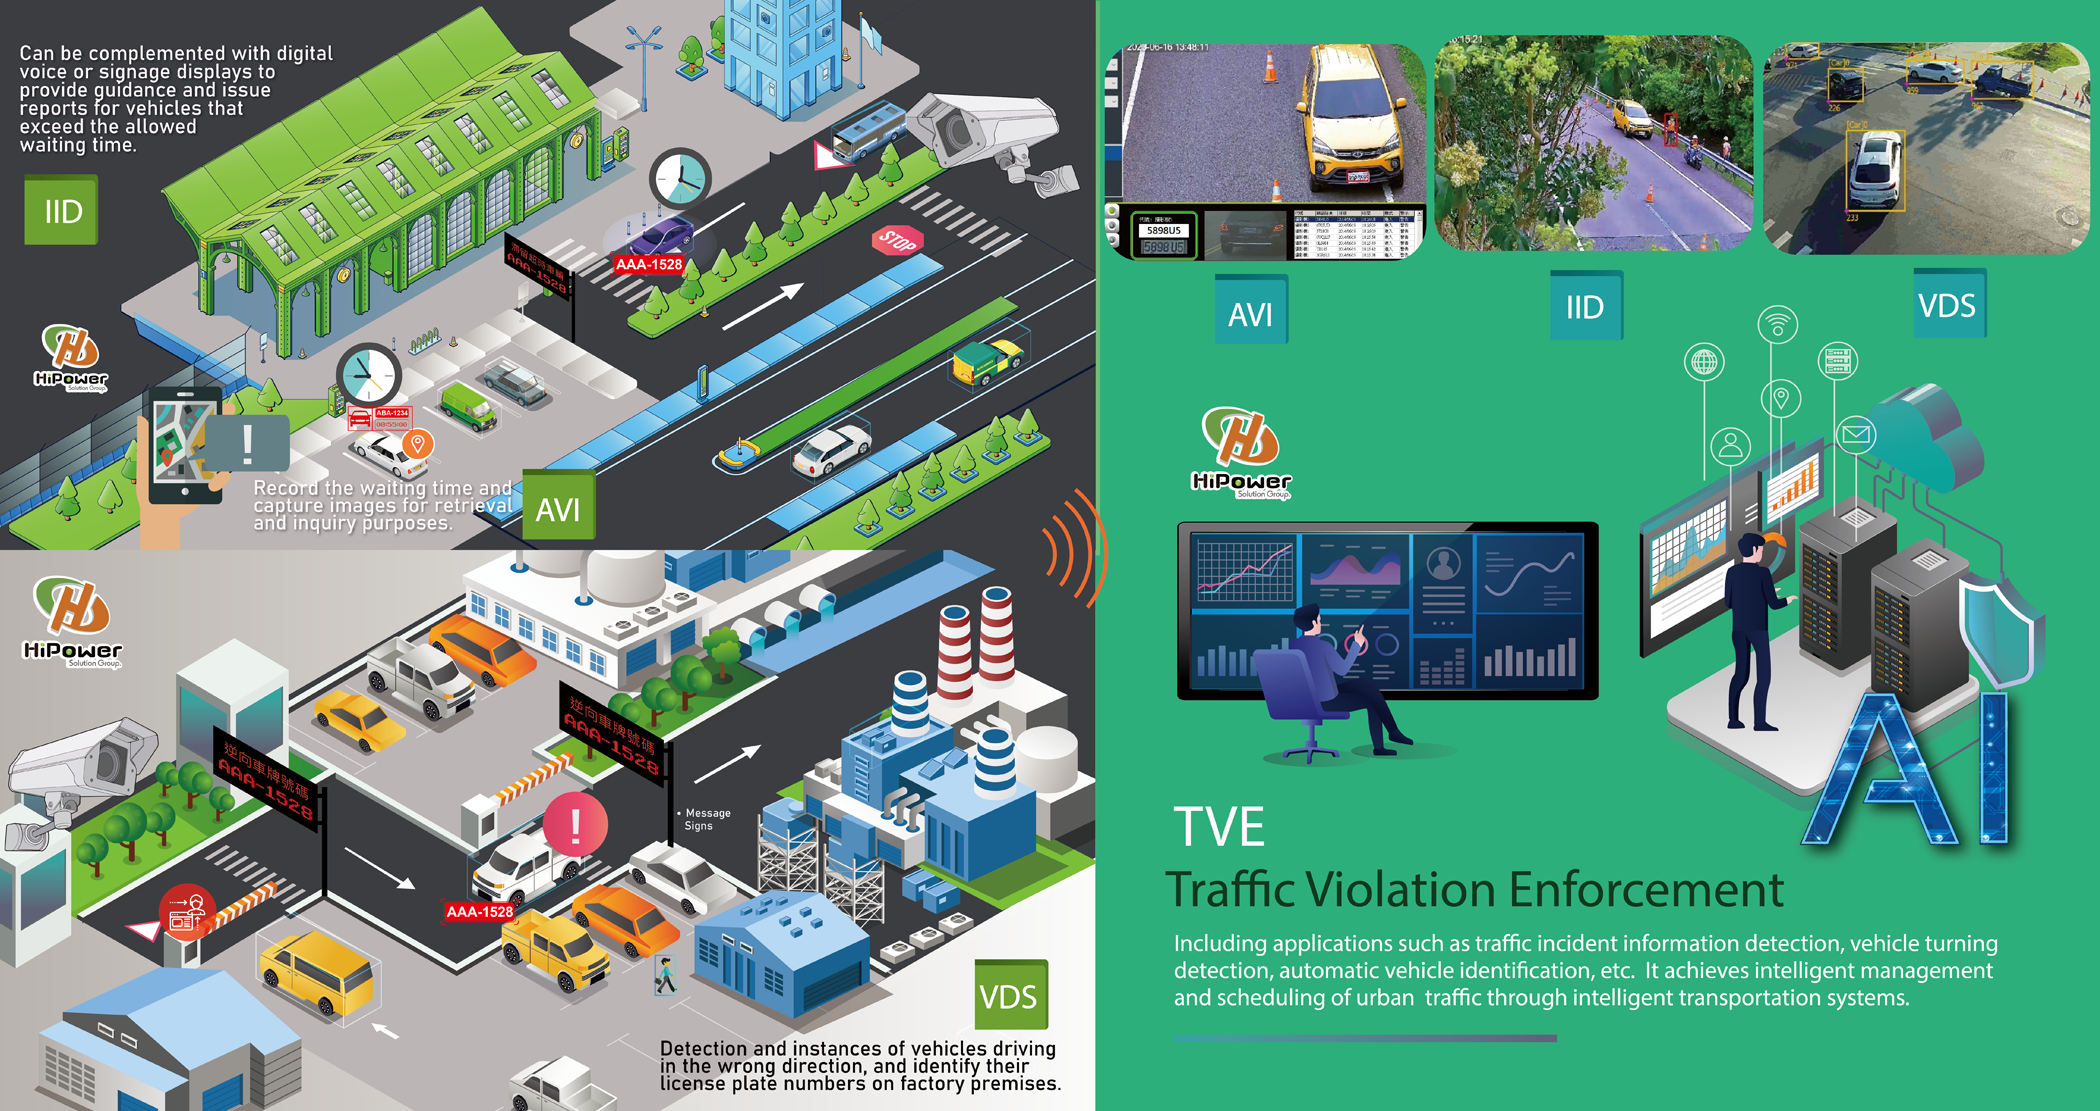 TVE Traffic Violation Enforcement